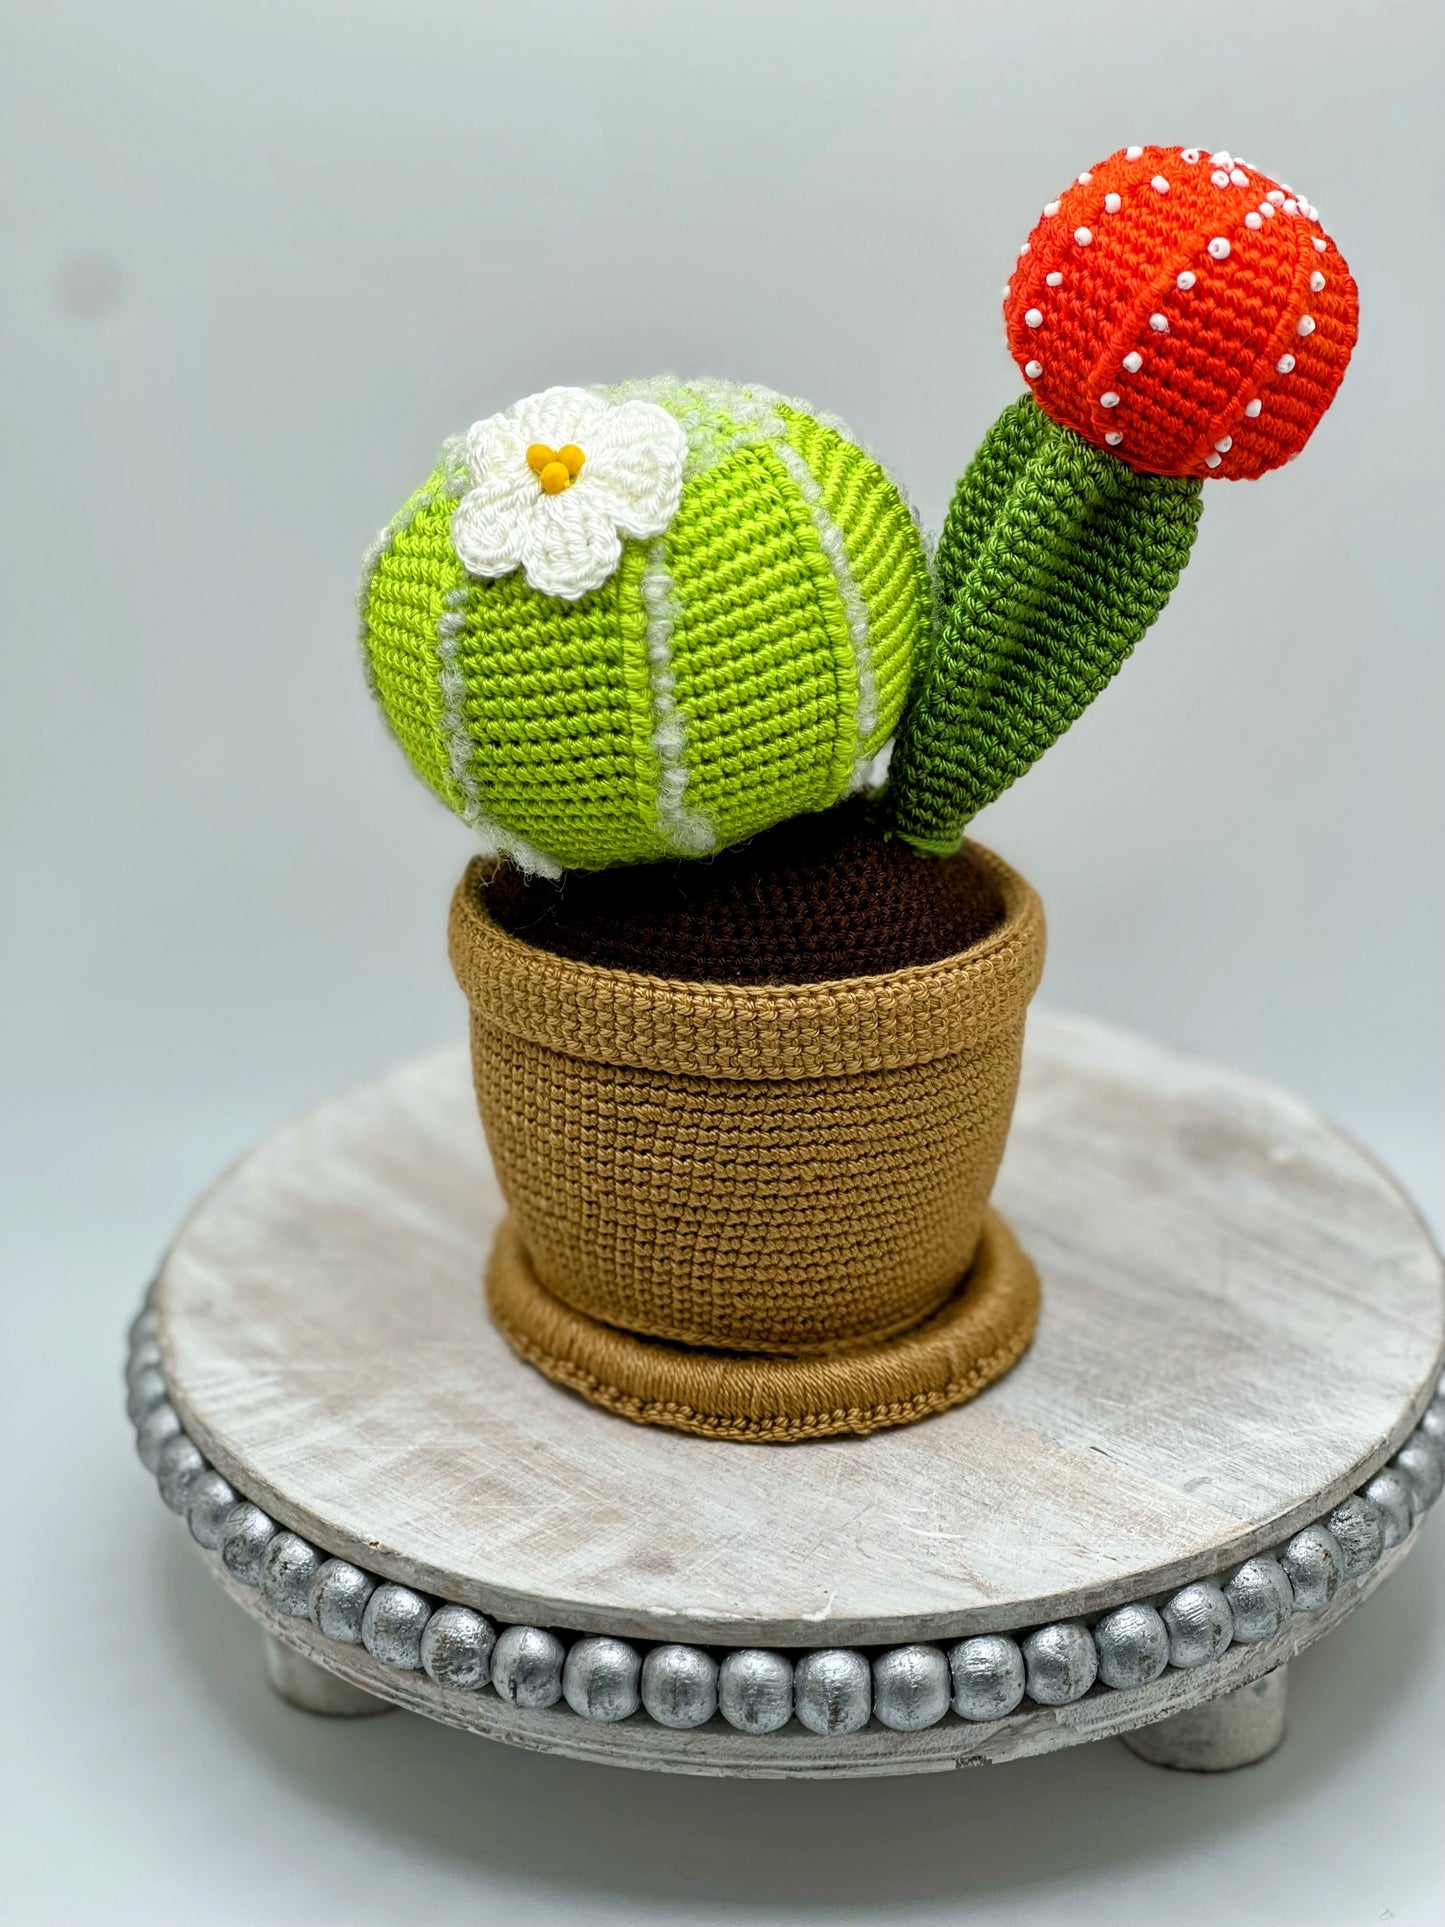 Stuffed Cactus 🌵 Toy - Crochet Knitted Amigurumi Toy